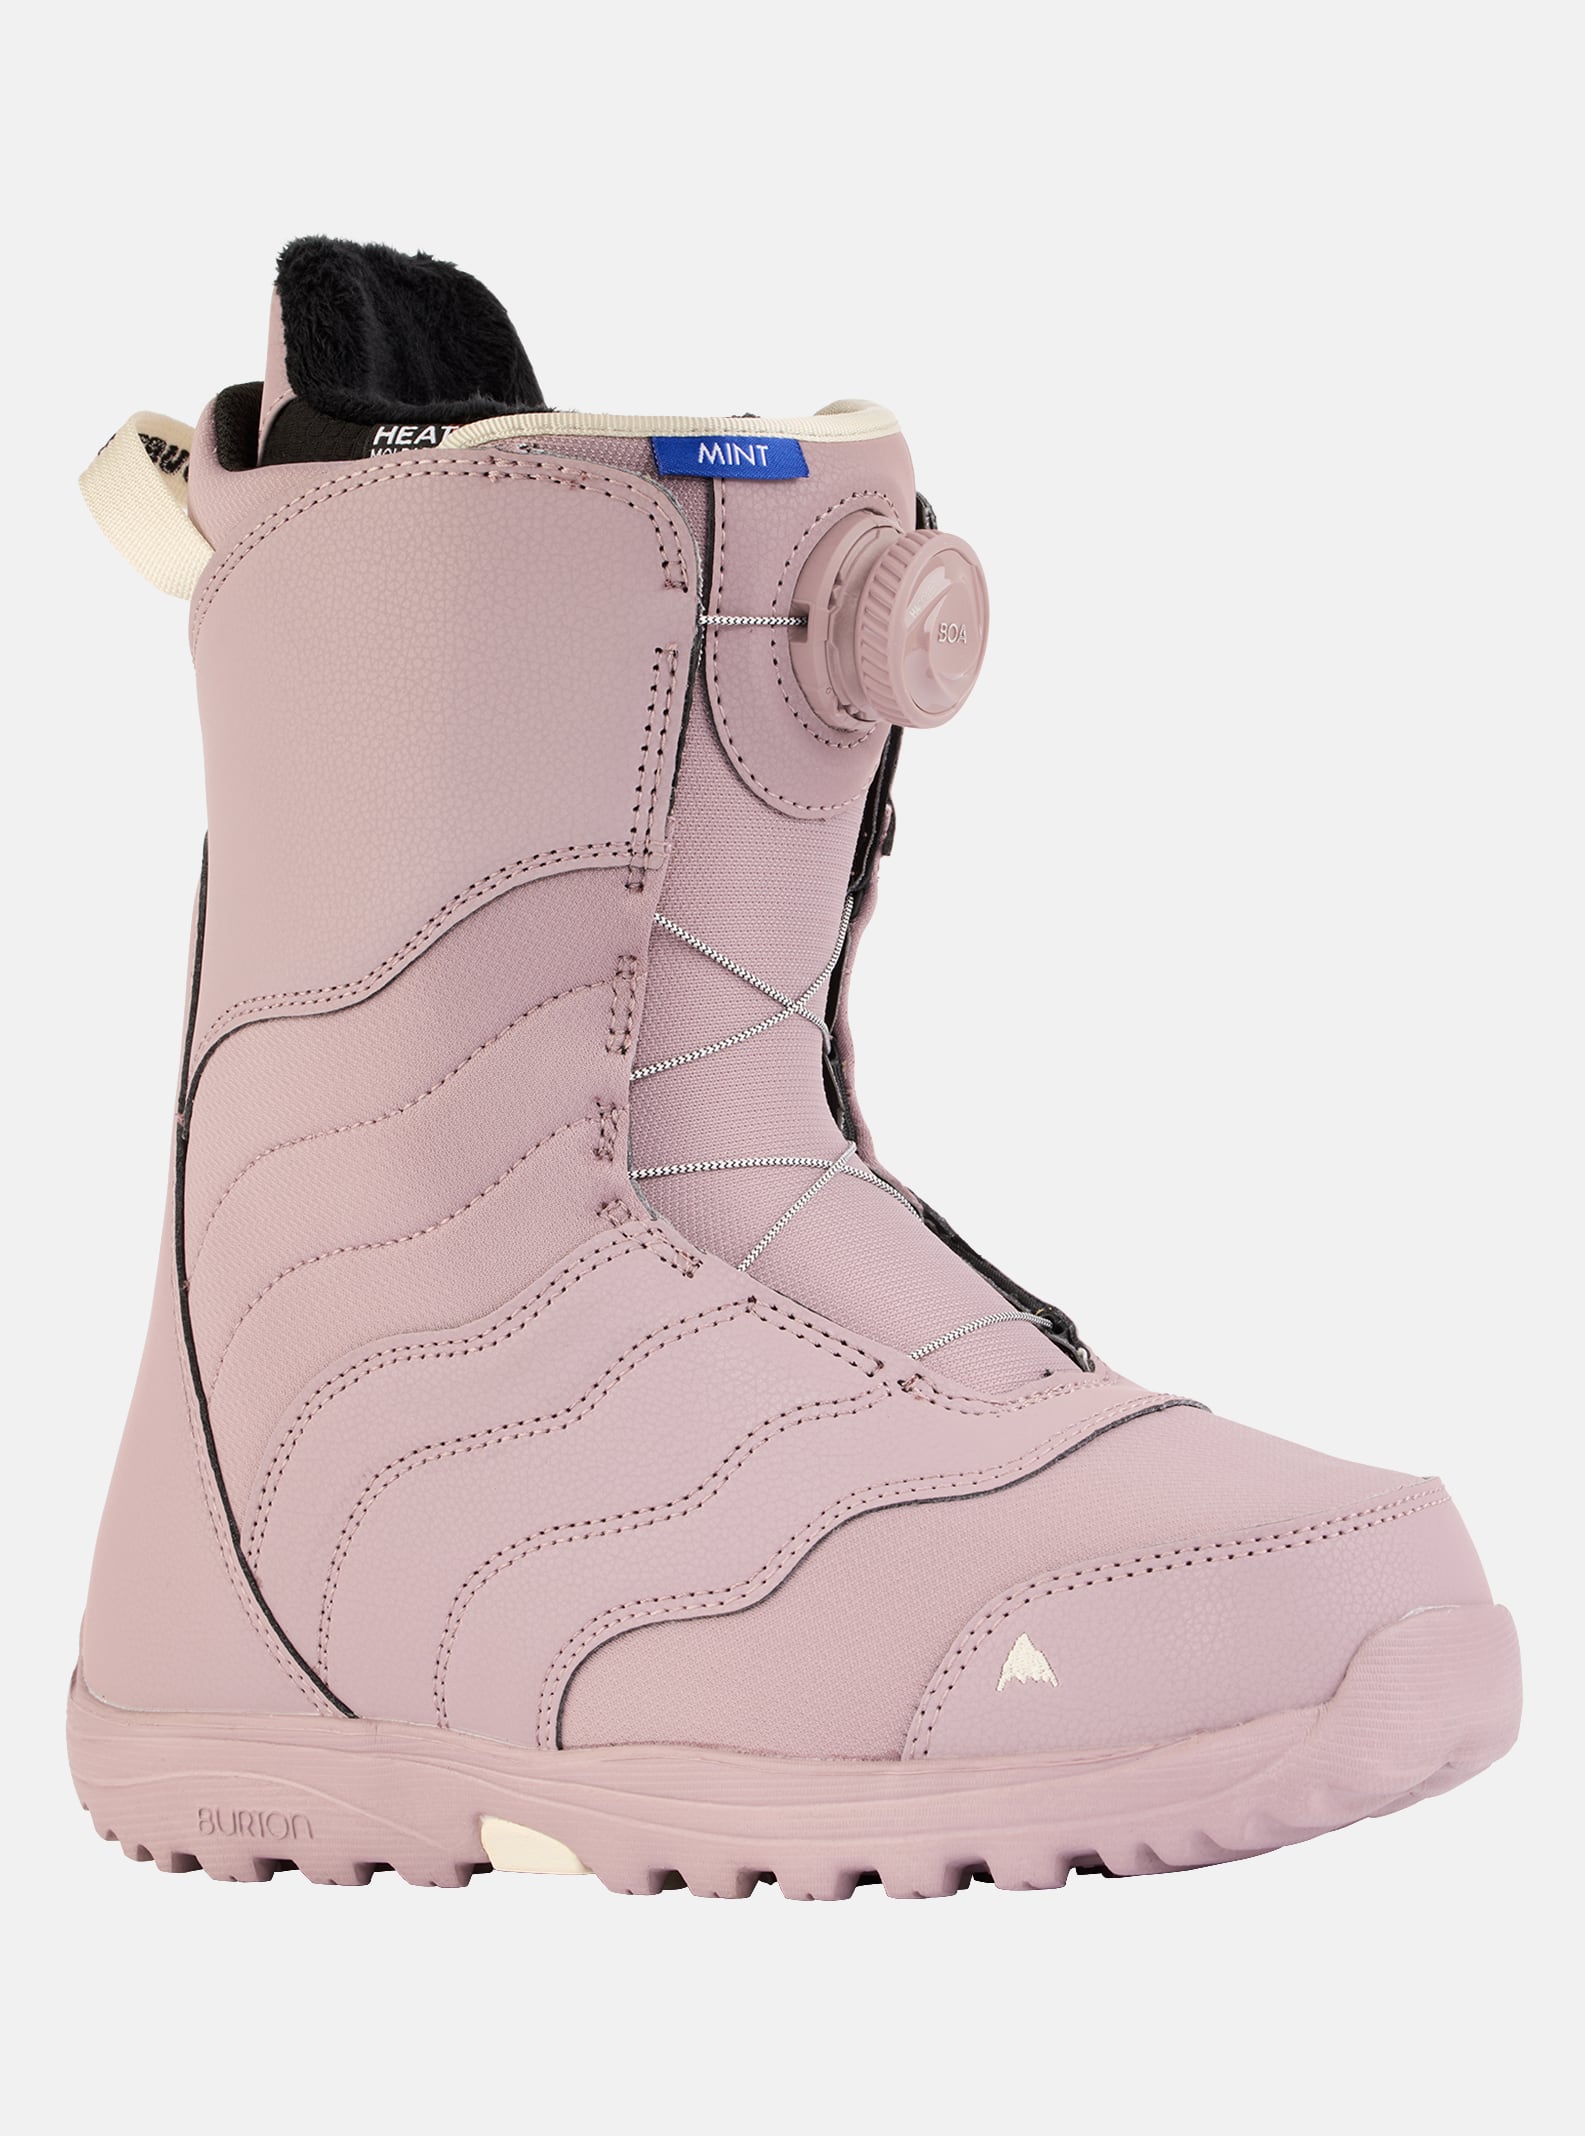 Women's Burton Mint BOA® Snowboard Boots